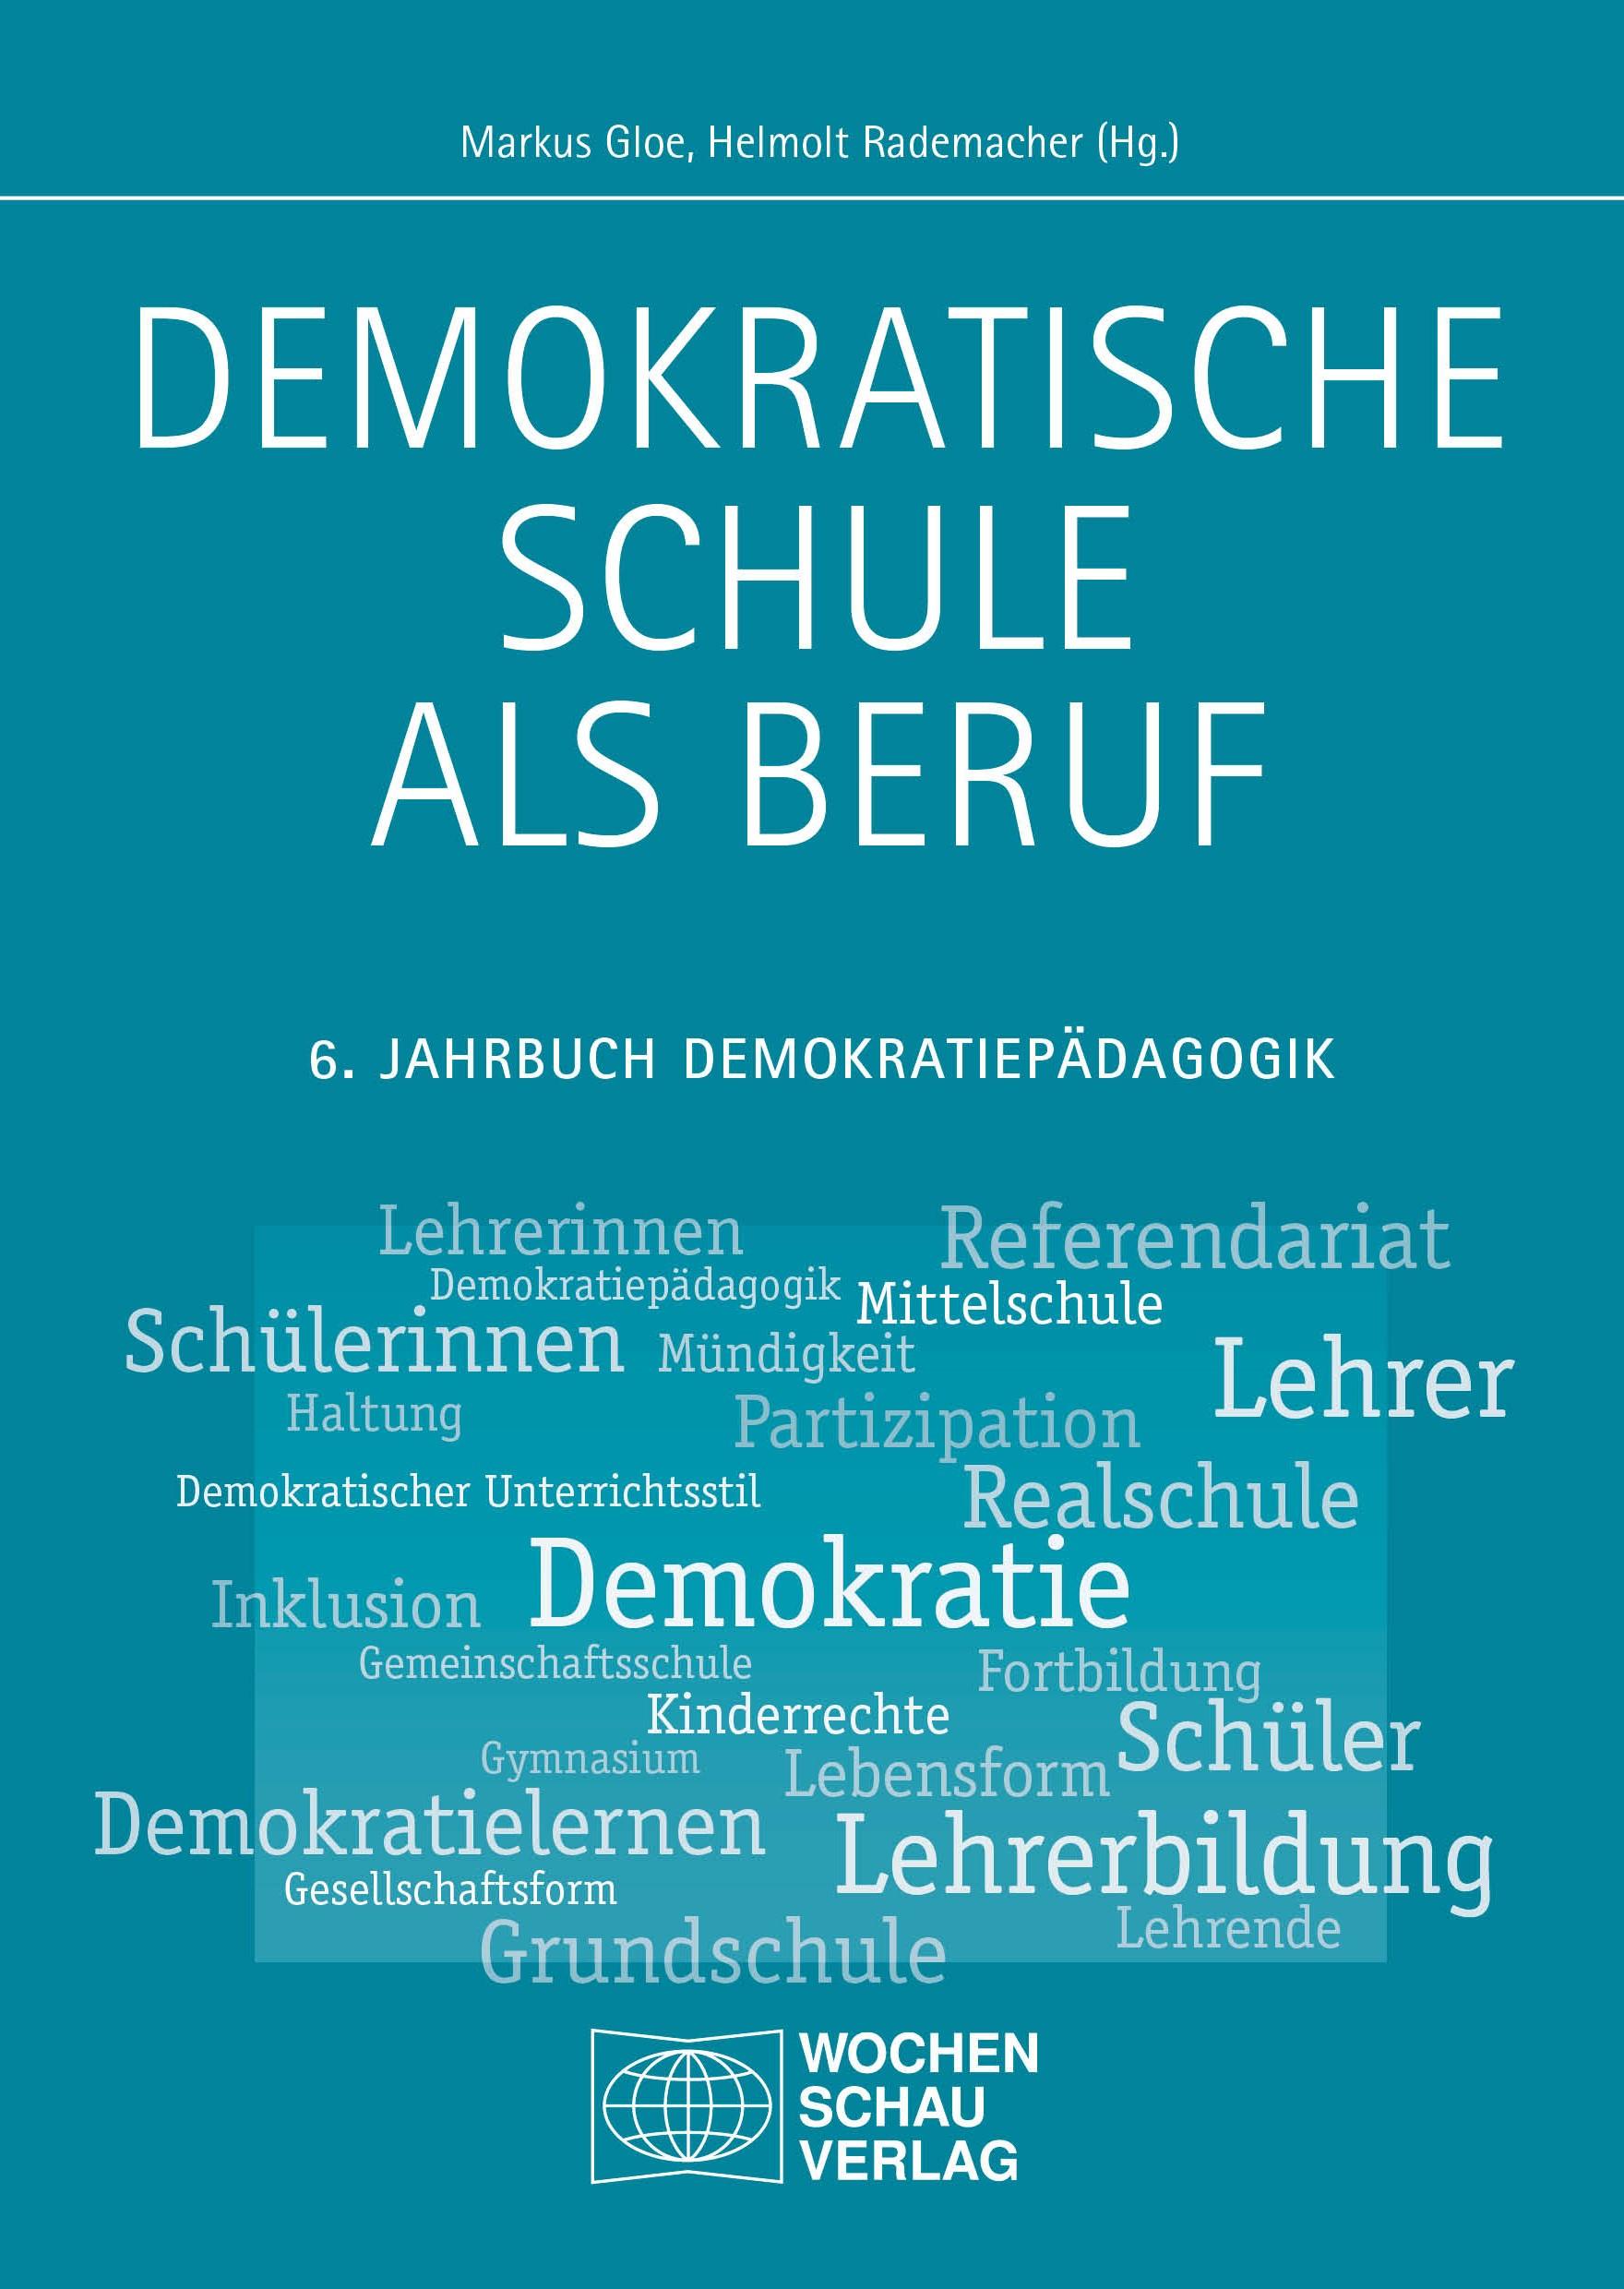 Demokratische Schule als Beruf | 6. Jahrbuch Demokratiepädagogik | Markus Gloe (u. a.) | Taschenbuch | Jahrbuch Demokratiepädagogik | 384 S. | Deutsch | 2018 | Wochenschau Verlag | EAN 9783734407796 - Gloe, Markus